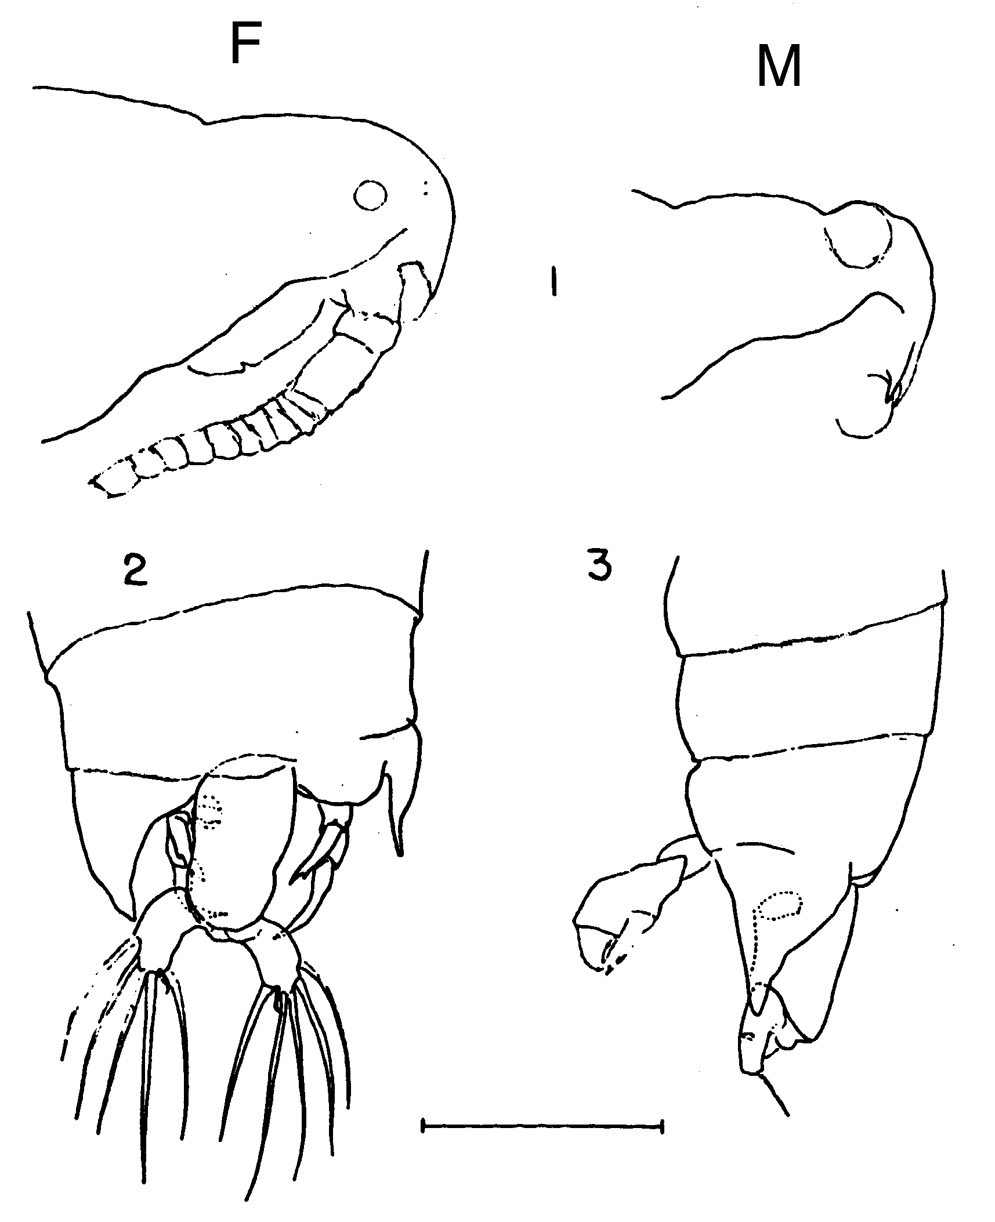 Espce Labidocera barbadiensis - Planche 1 de figures morphologiques